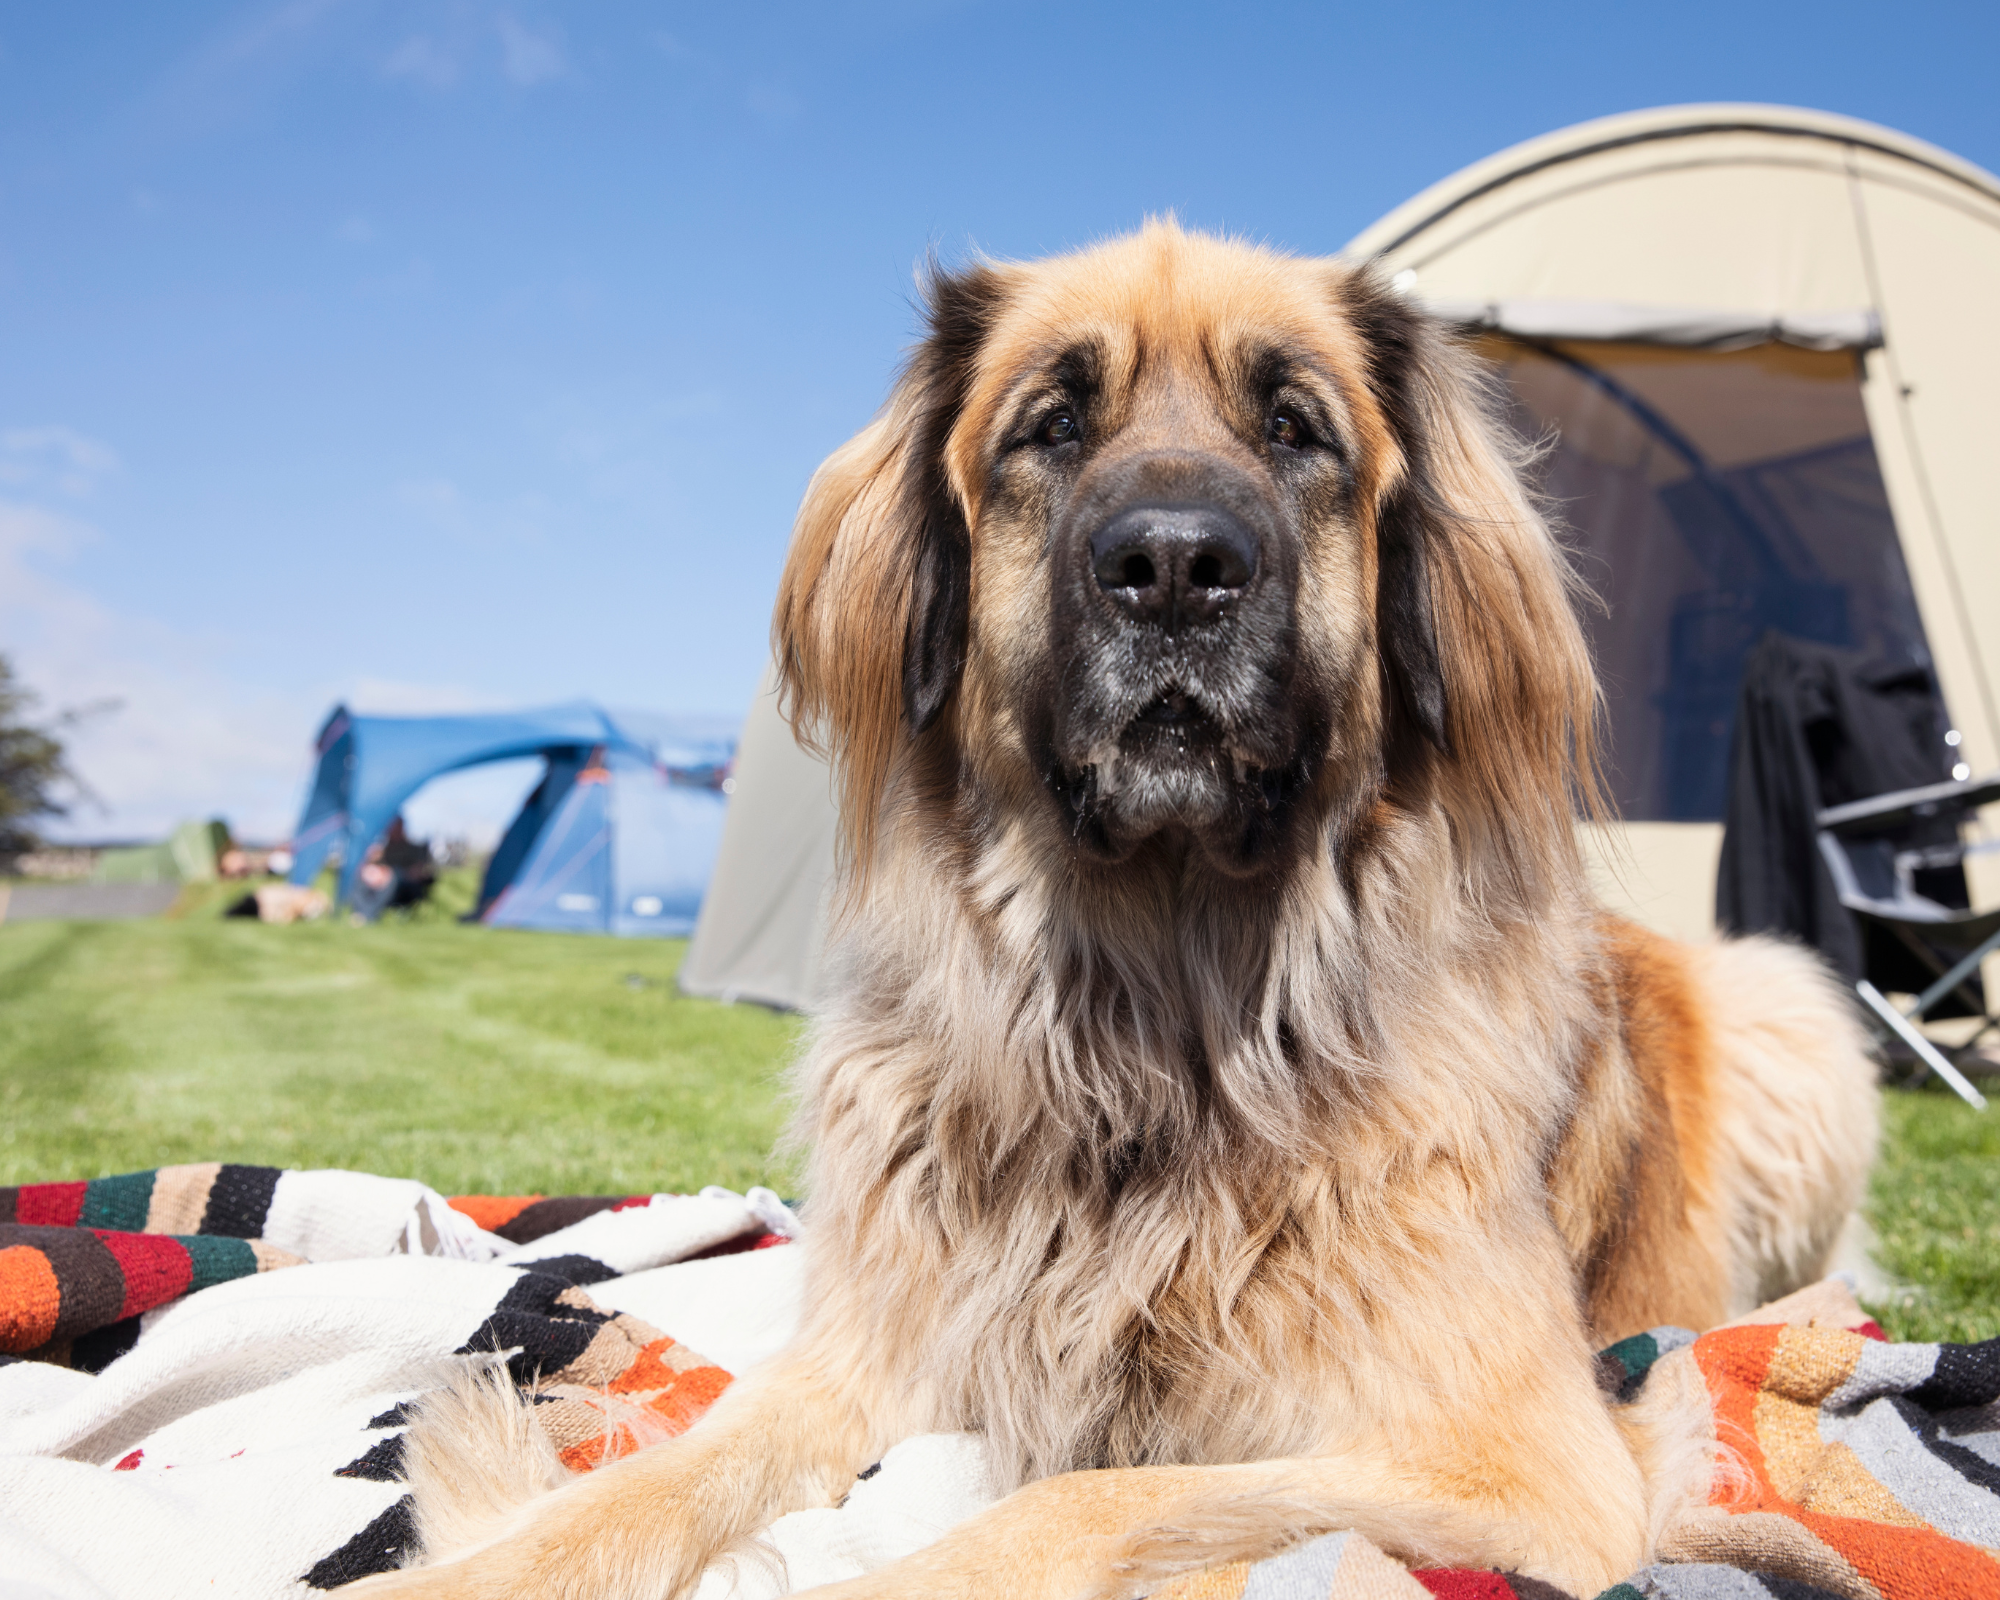 Beautiful big dog, laying down enjoying the sunshine and the campsite